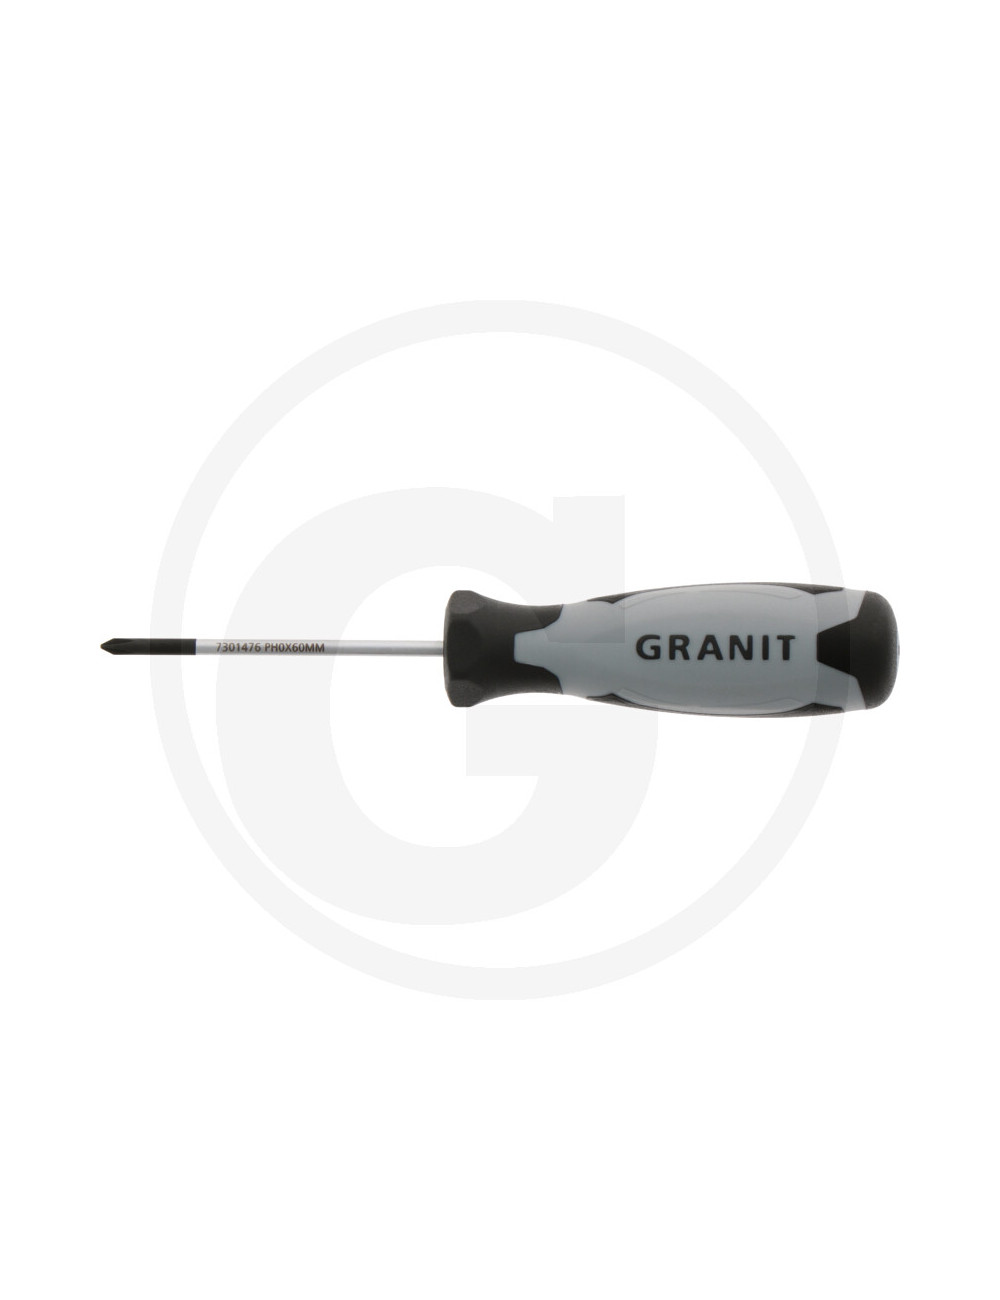 Cacciavite, PH0 Granit Black Edition cod 7301476